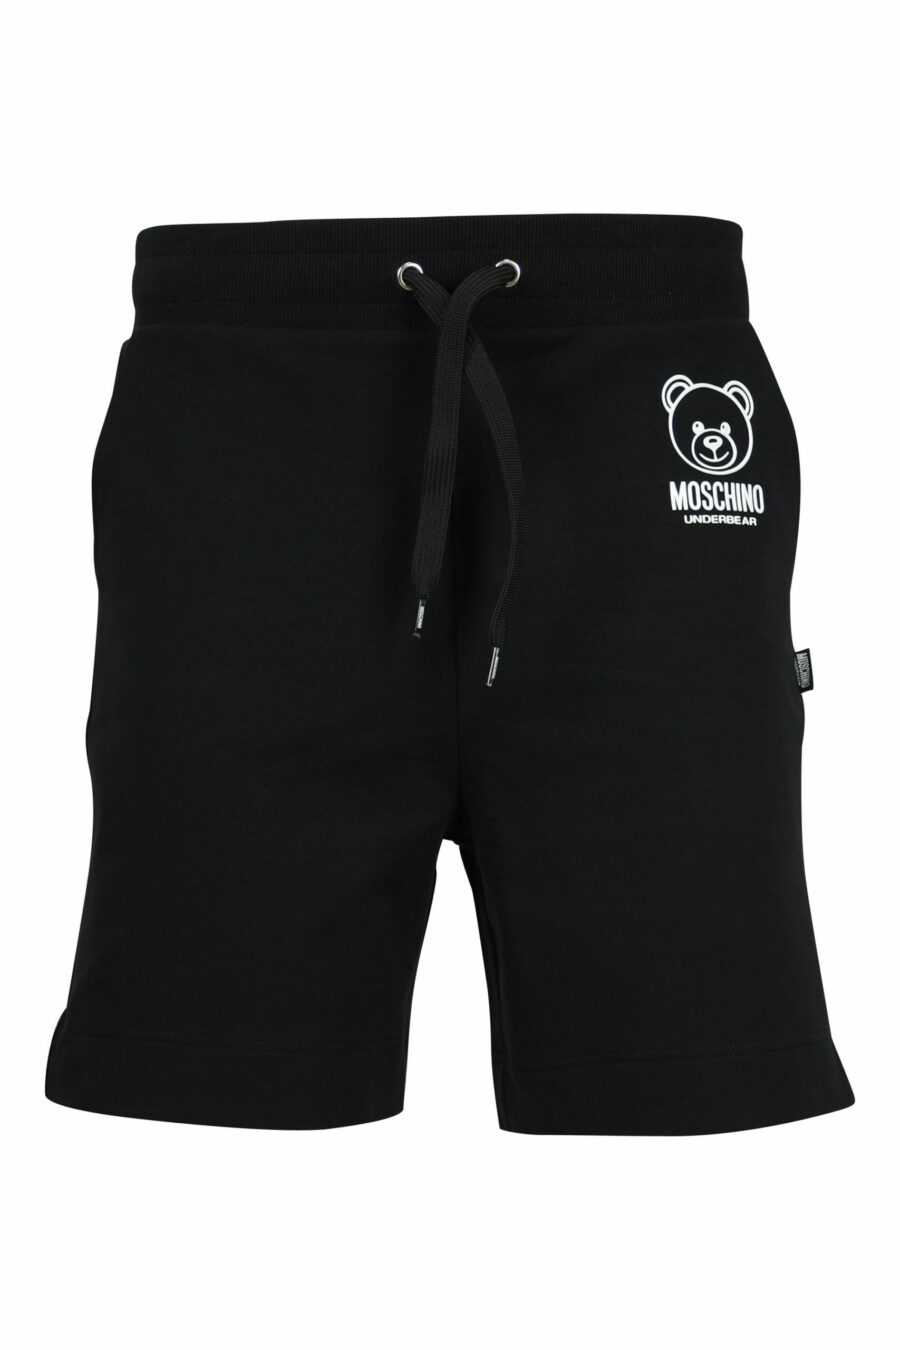 Trainingshose schwarz mit Mini-Logo Bär "underbear" in schwarzem Gummi - 667113622200 skaliert